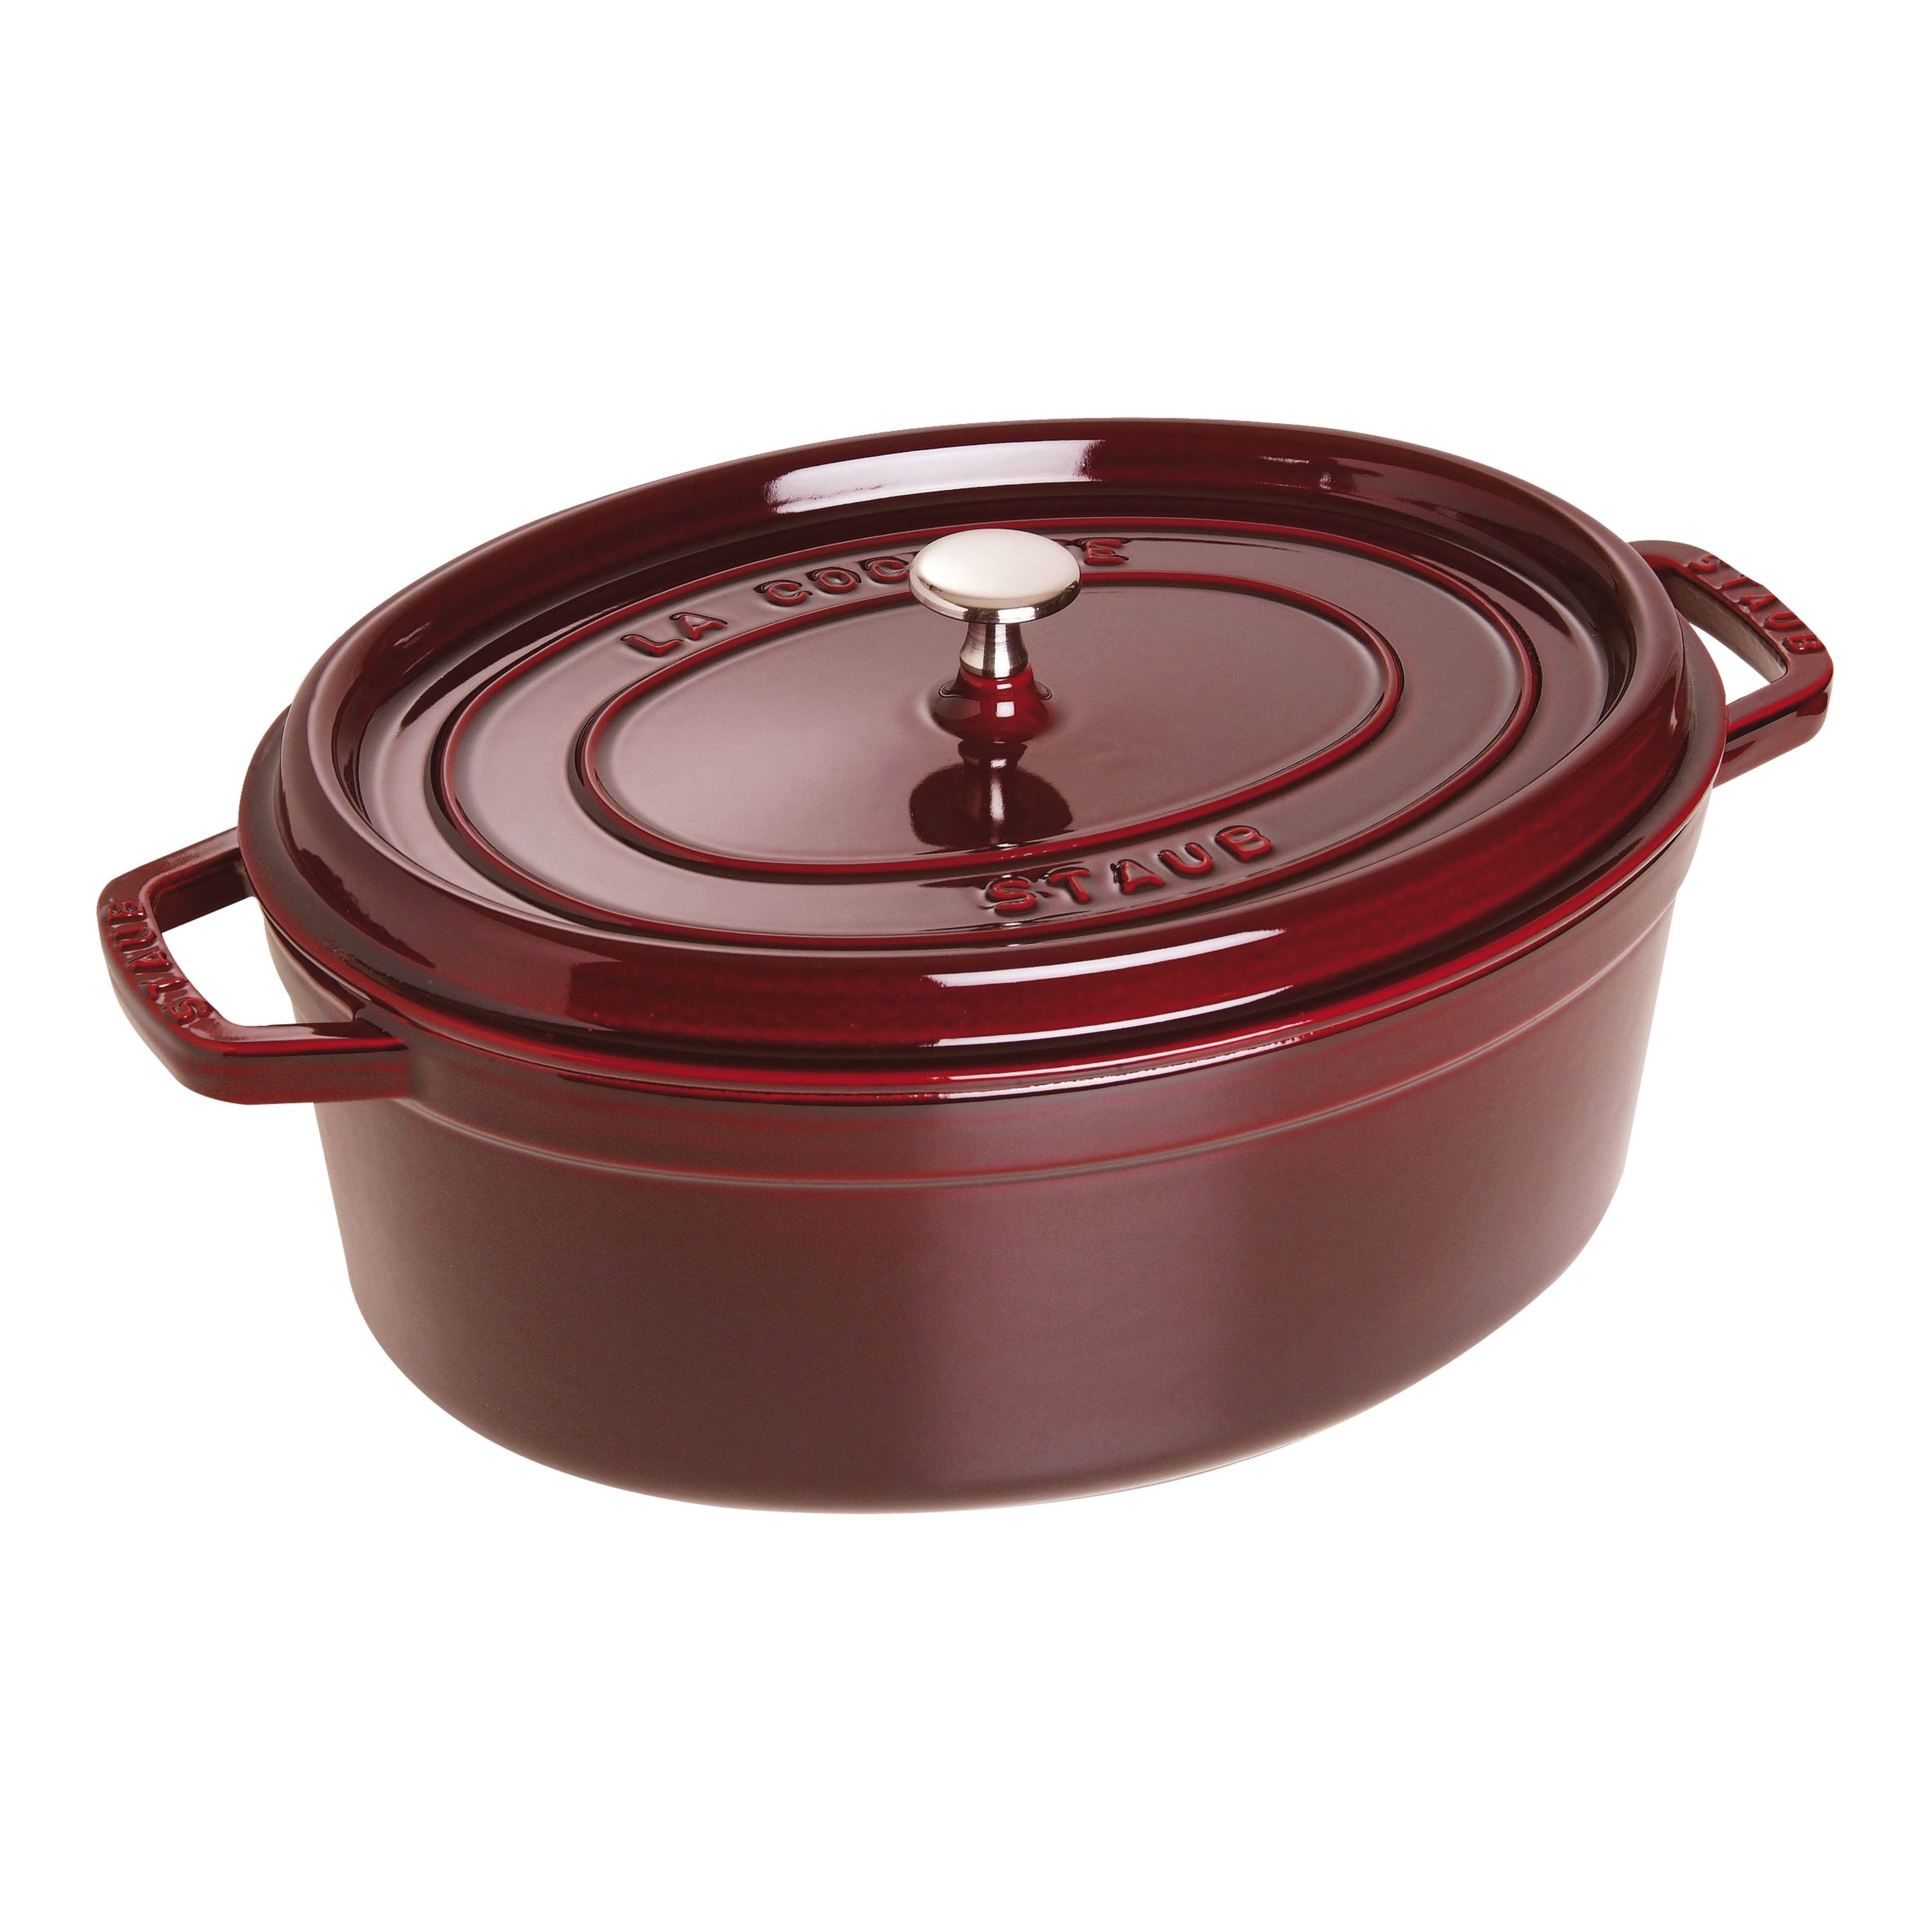 Crock Pot Artisan 7-Quart Oval Dutch Oven - Red, 7 qt - Foods Co.